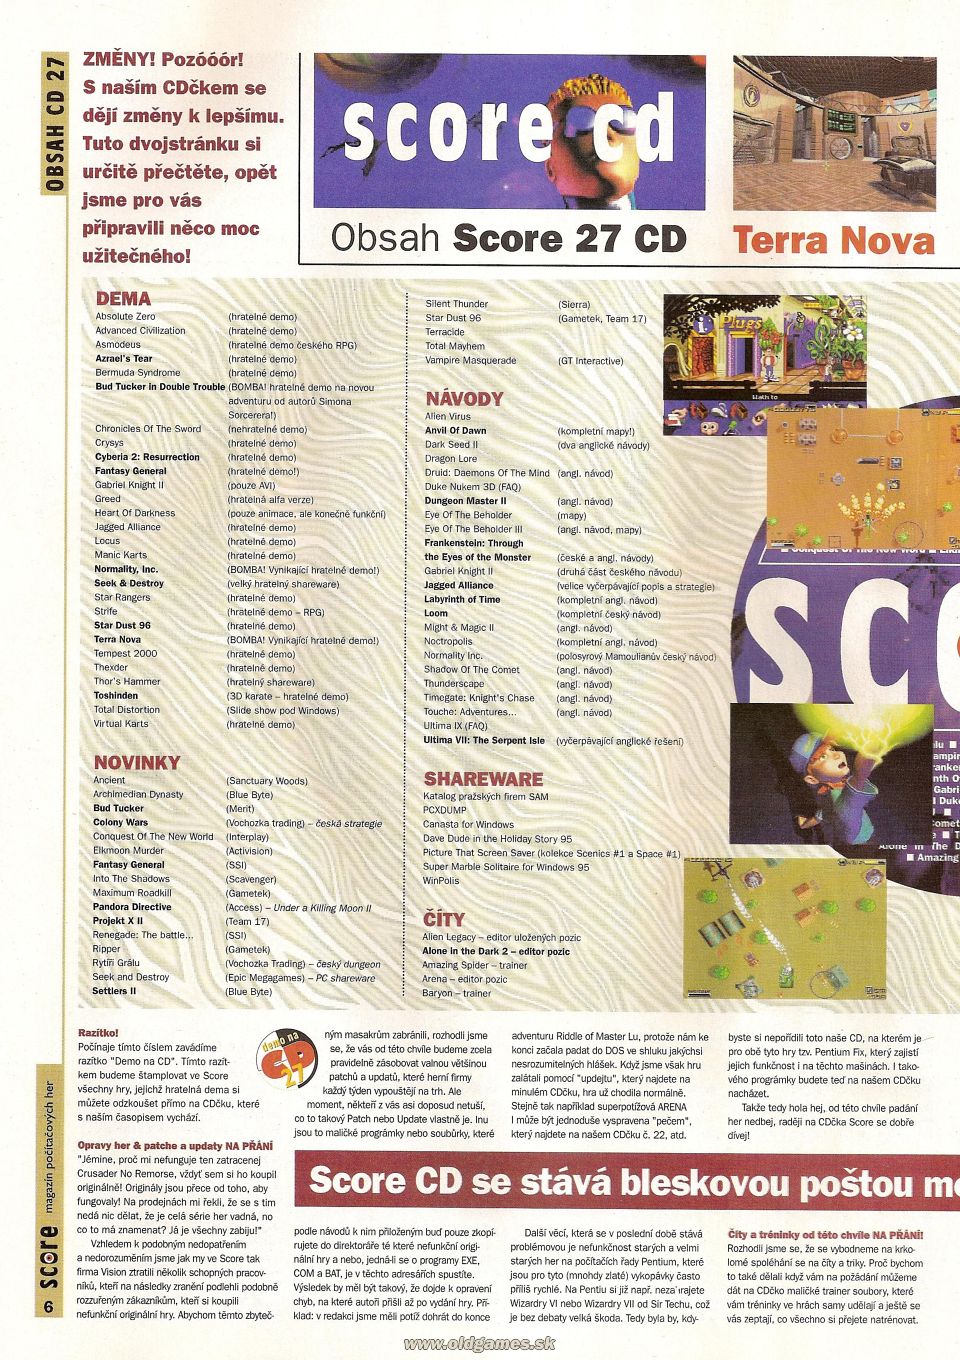 Obsah Score CD 27